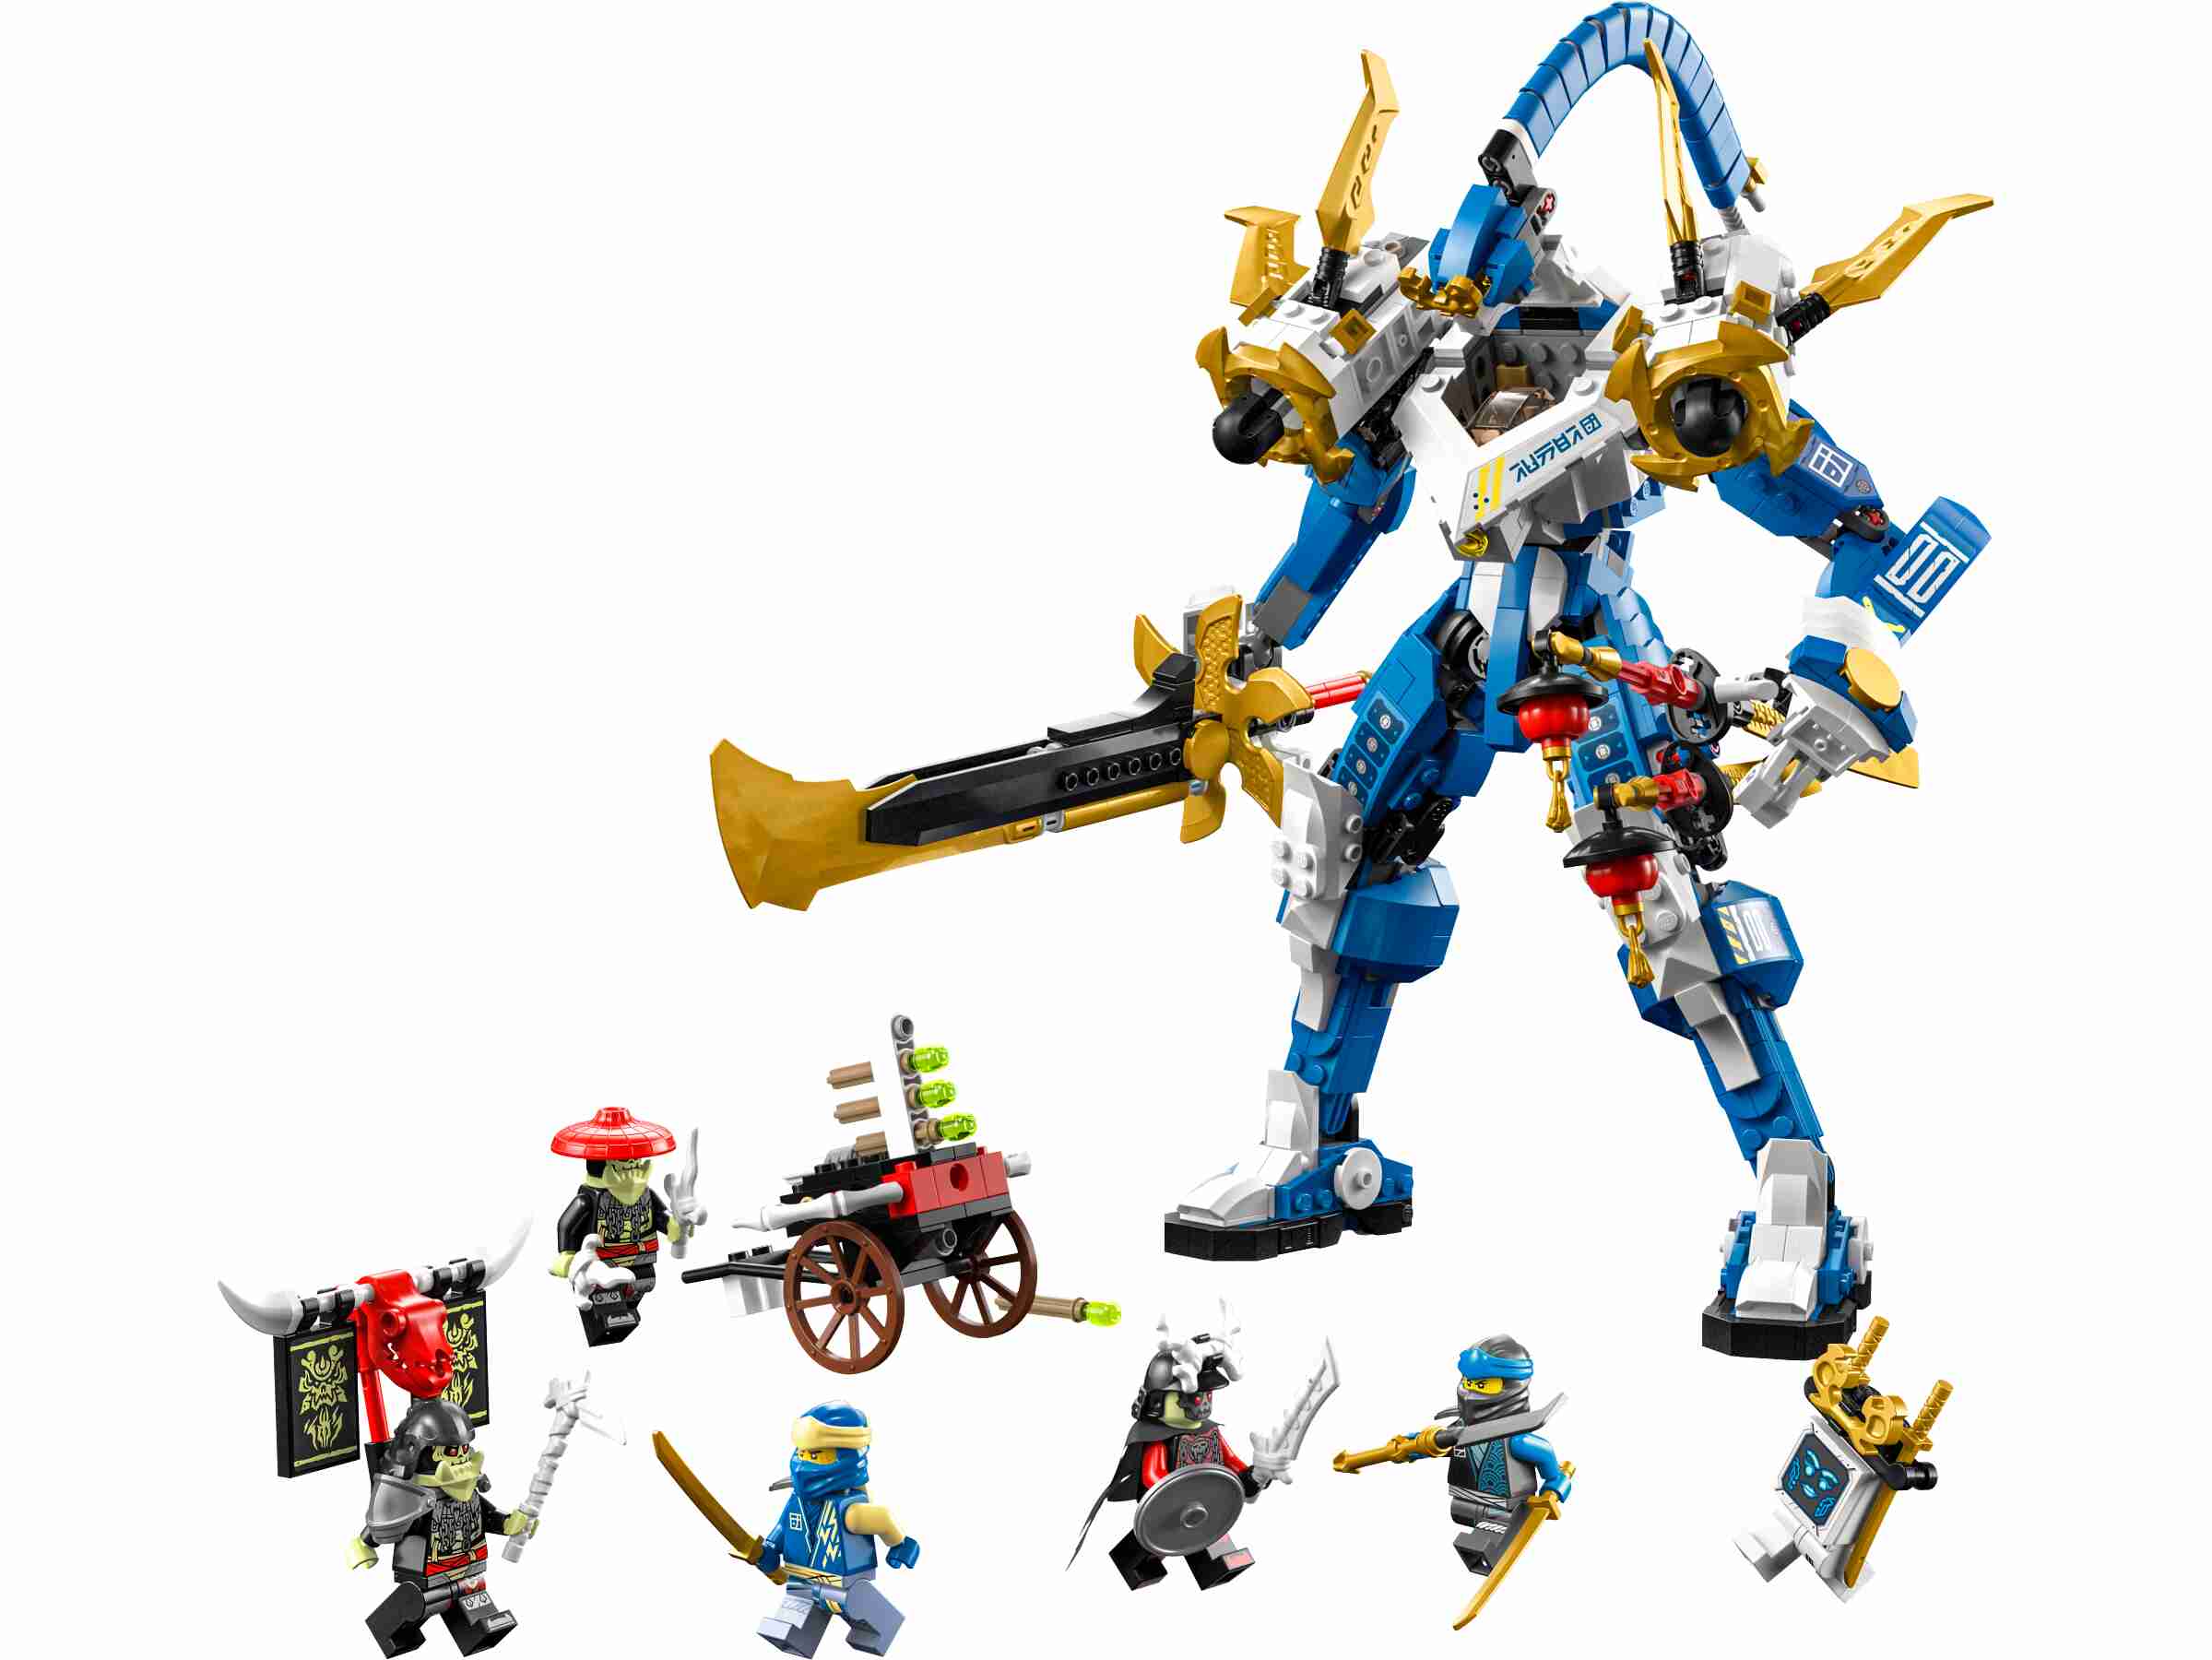 LEGO 71785 NINJAGO Jays Titan-Mech, 5 Minifiguren, Pixal-Bot, Doppelarmbrust